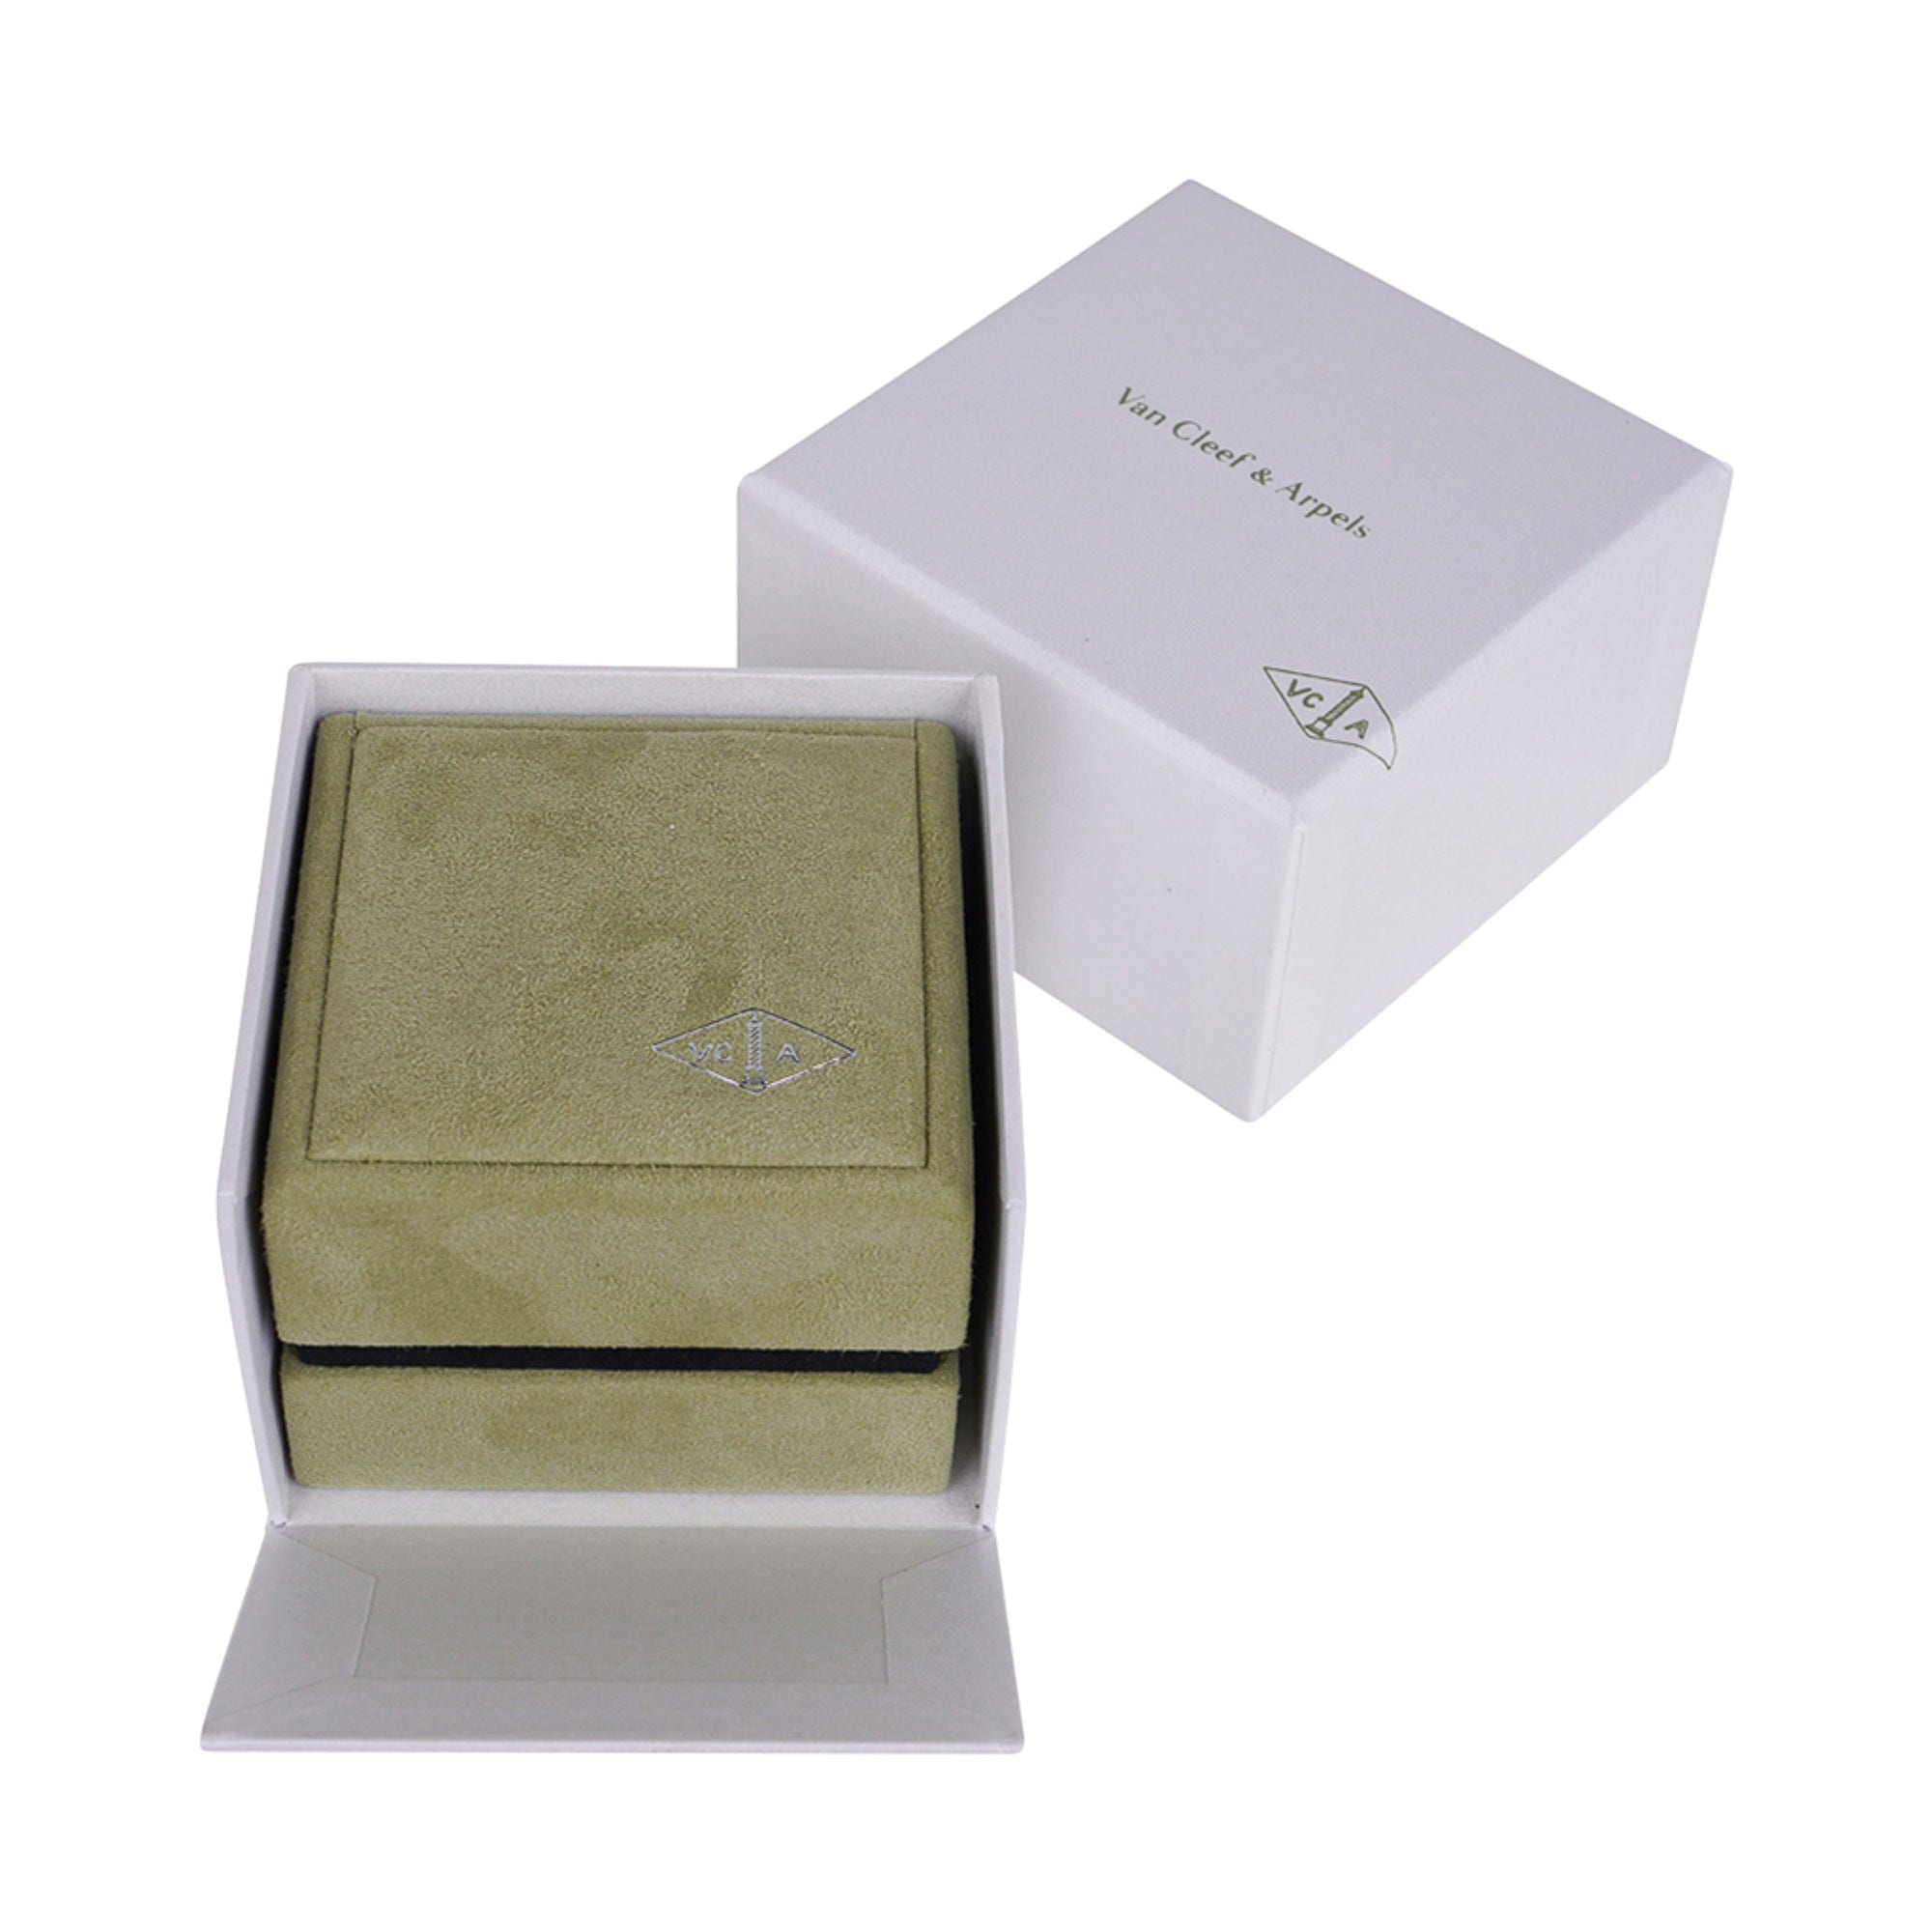 Van Cleef & Arpels Necklace 2021 Holiday Rhodonite Alhambra Diamond Ltd Ed  Rose